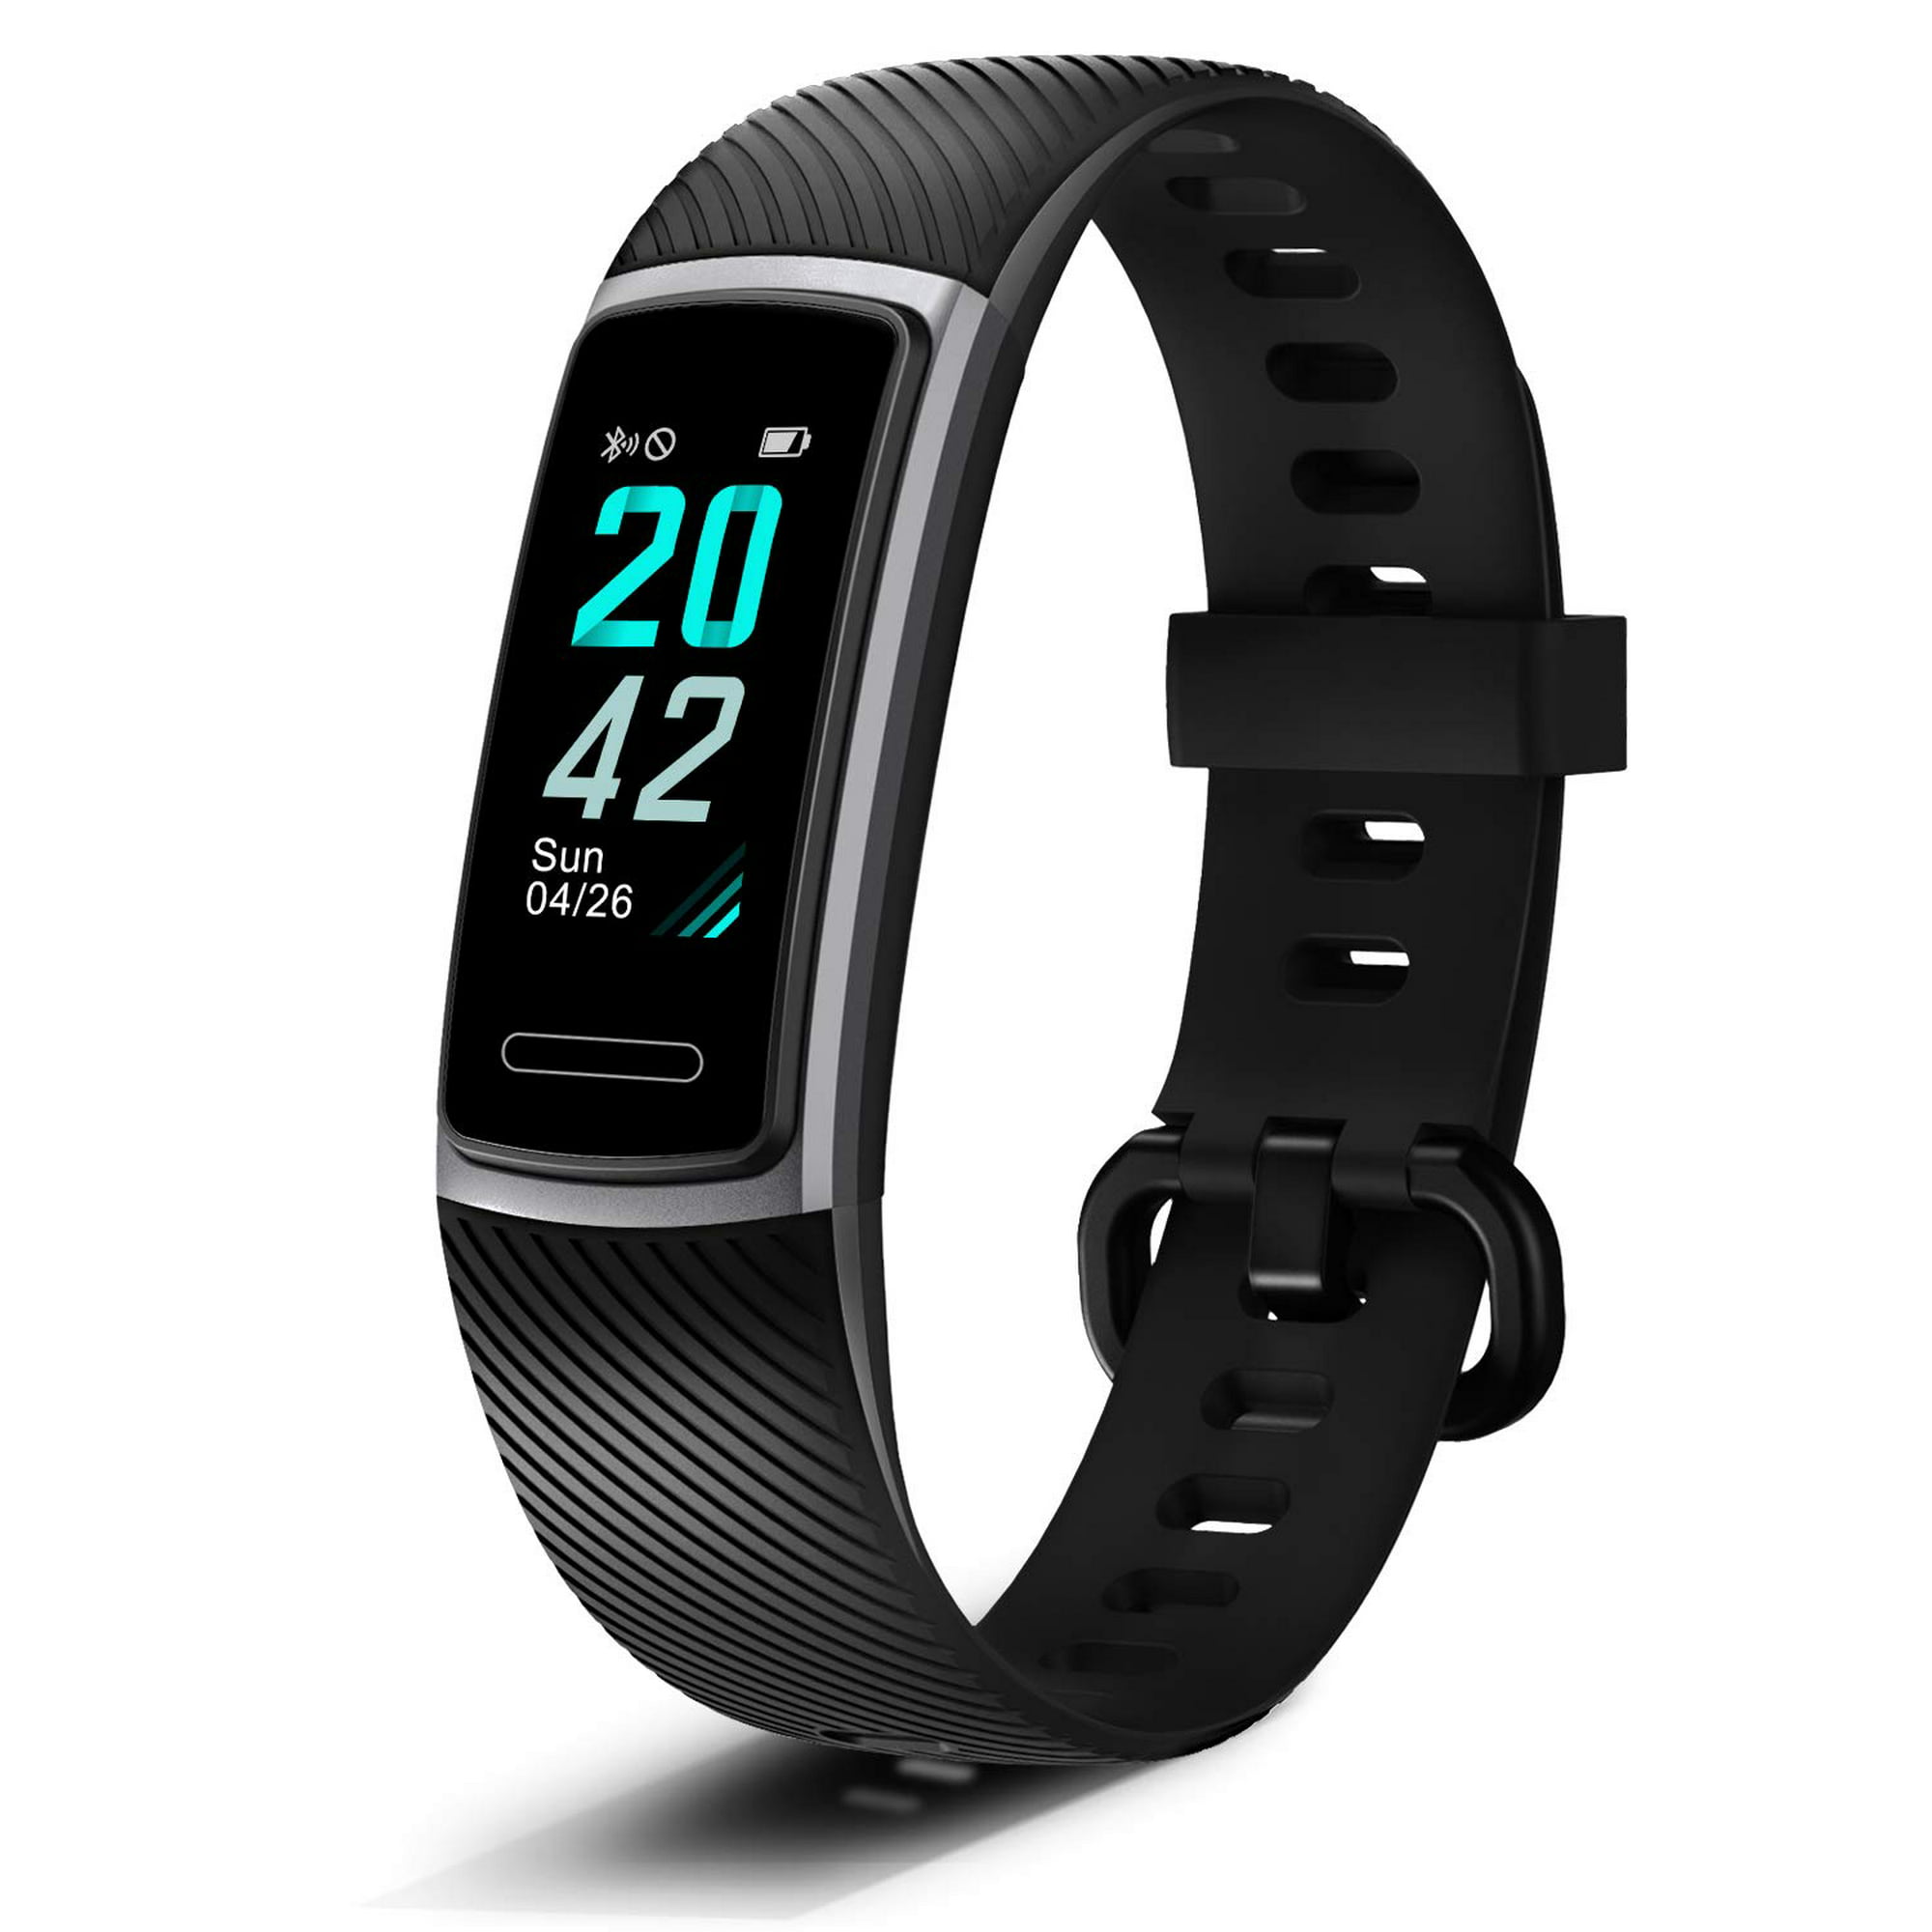 Smartwatch Reloj Smartband You, cuenta kms, cuenta pasos, calorias